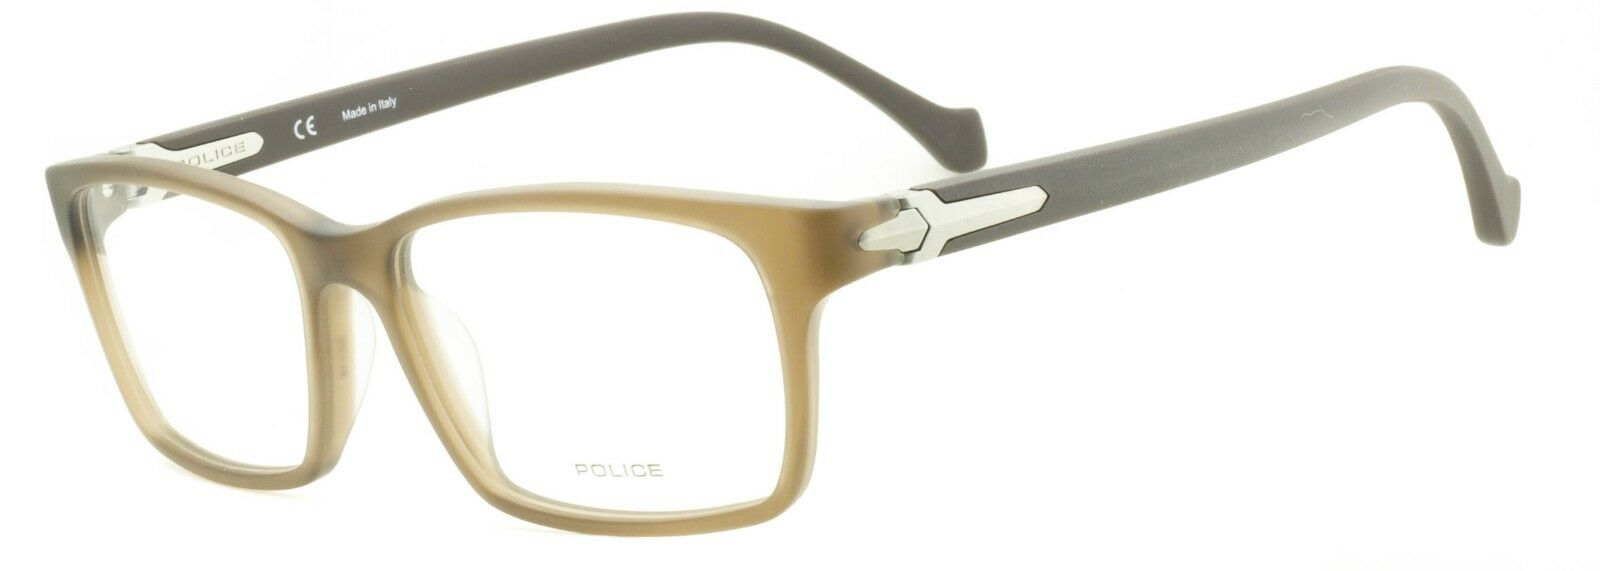 POLICE VPL 109M COL B36M Eyewear FRAMES NEW RX Optical Eyeglasses Glasses -Italy